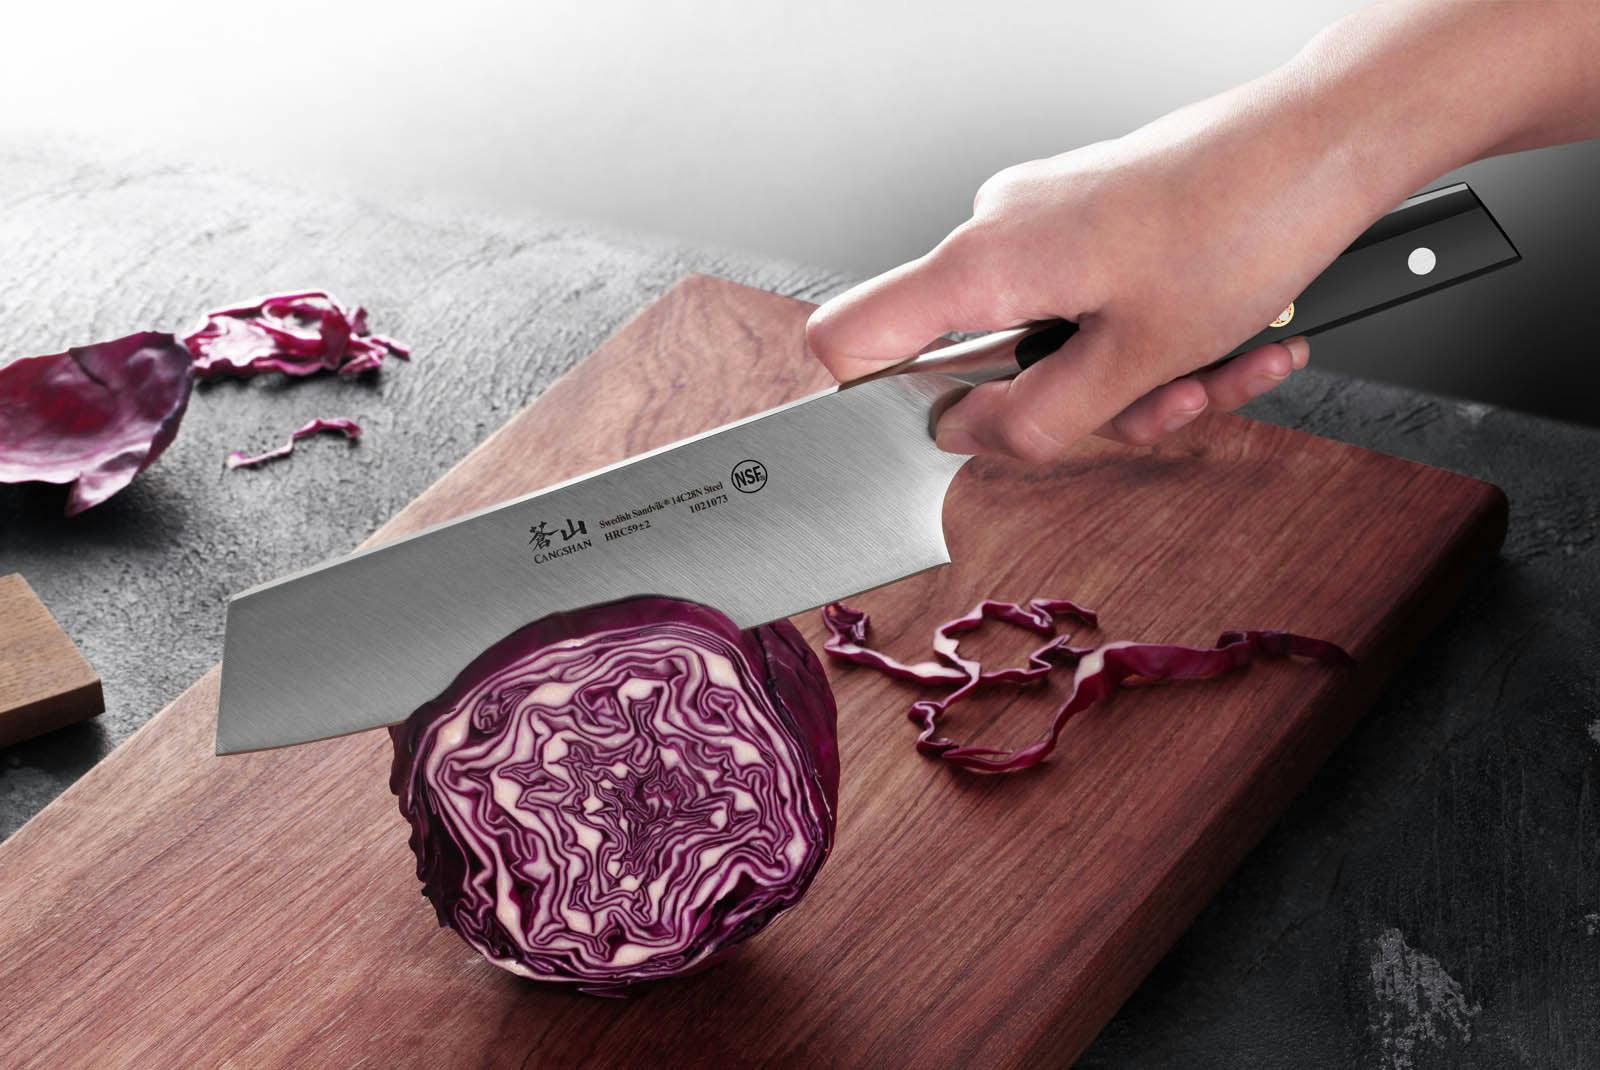 7 Rocking Chef Knife with Sheath - Black